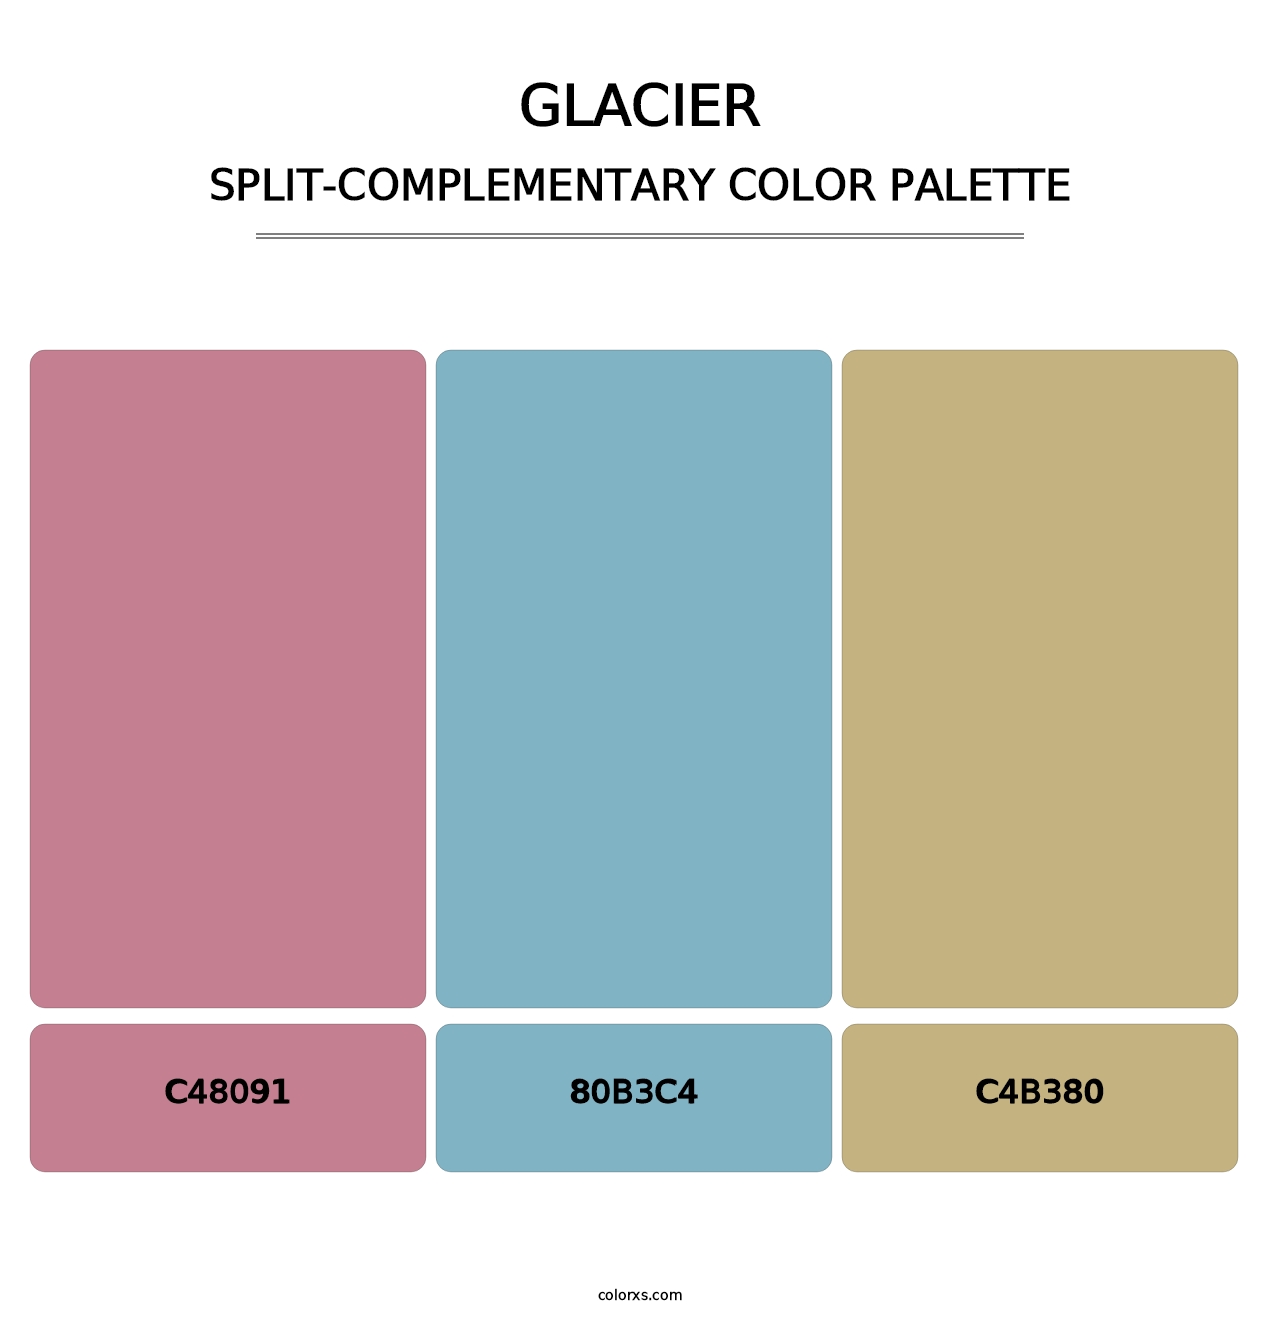 Glacier - Split-Complementary Color Palette